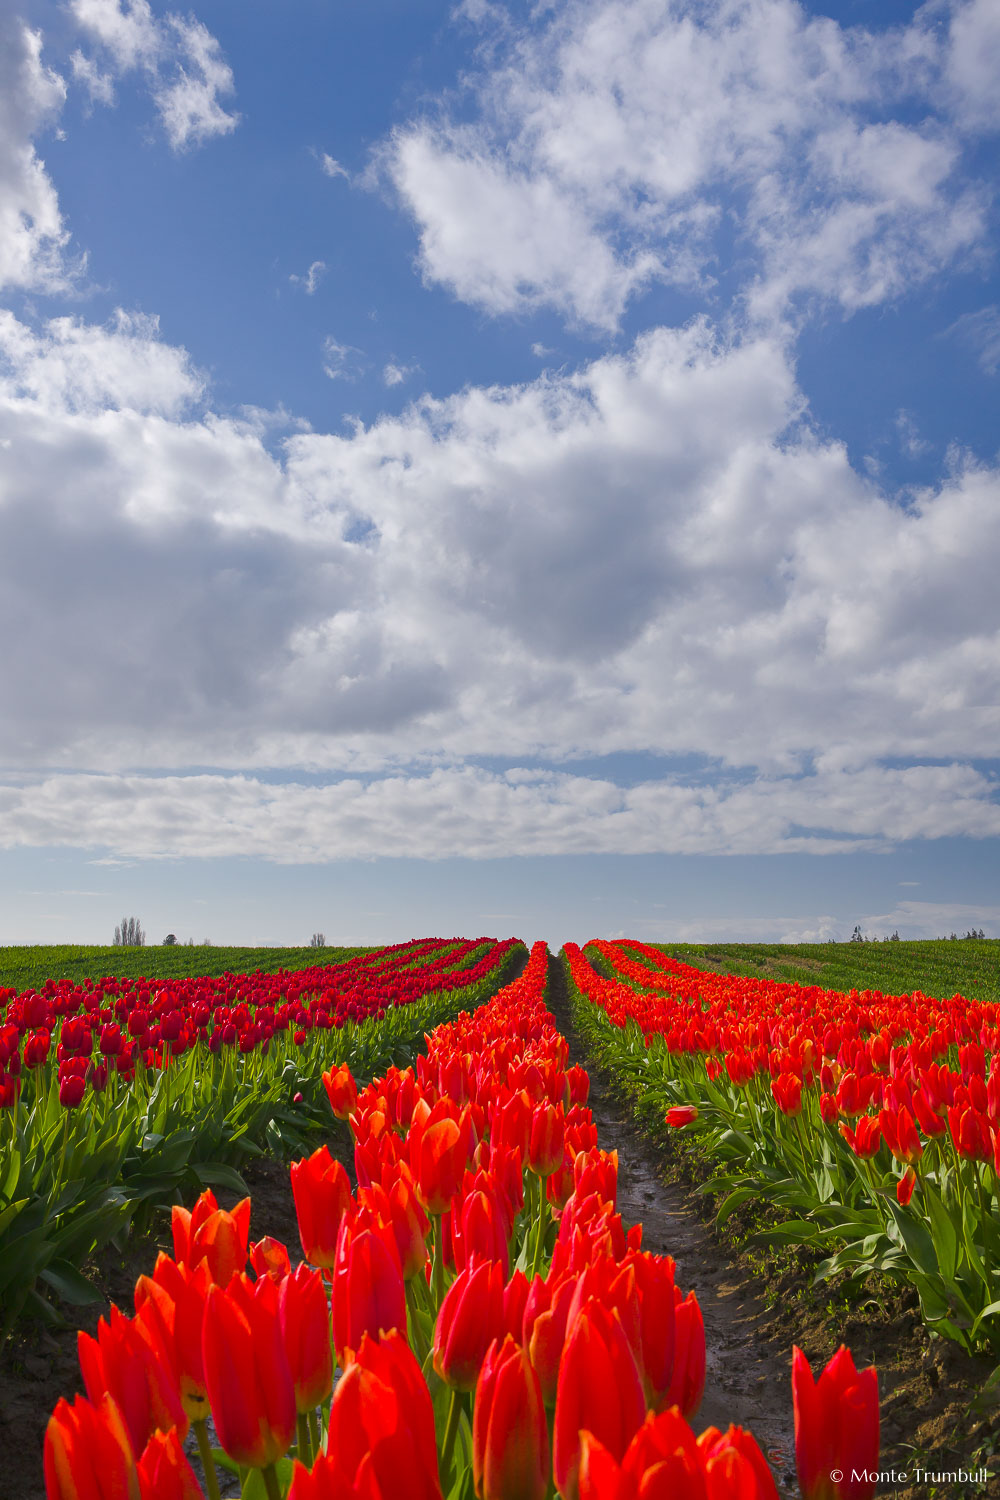 MT-20080410-164654-0002-Washington-Skagit-Valley-tulips-red-orange-blue-sky.jpg